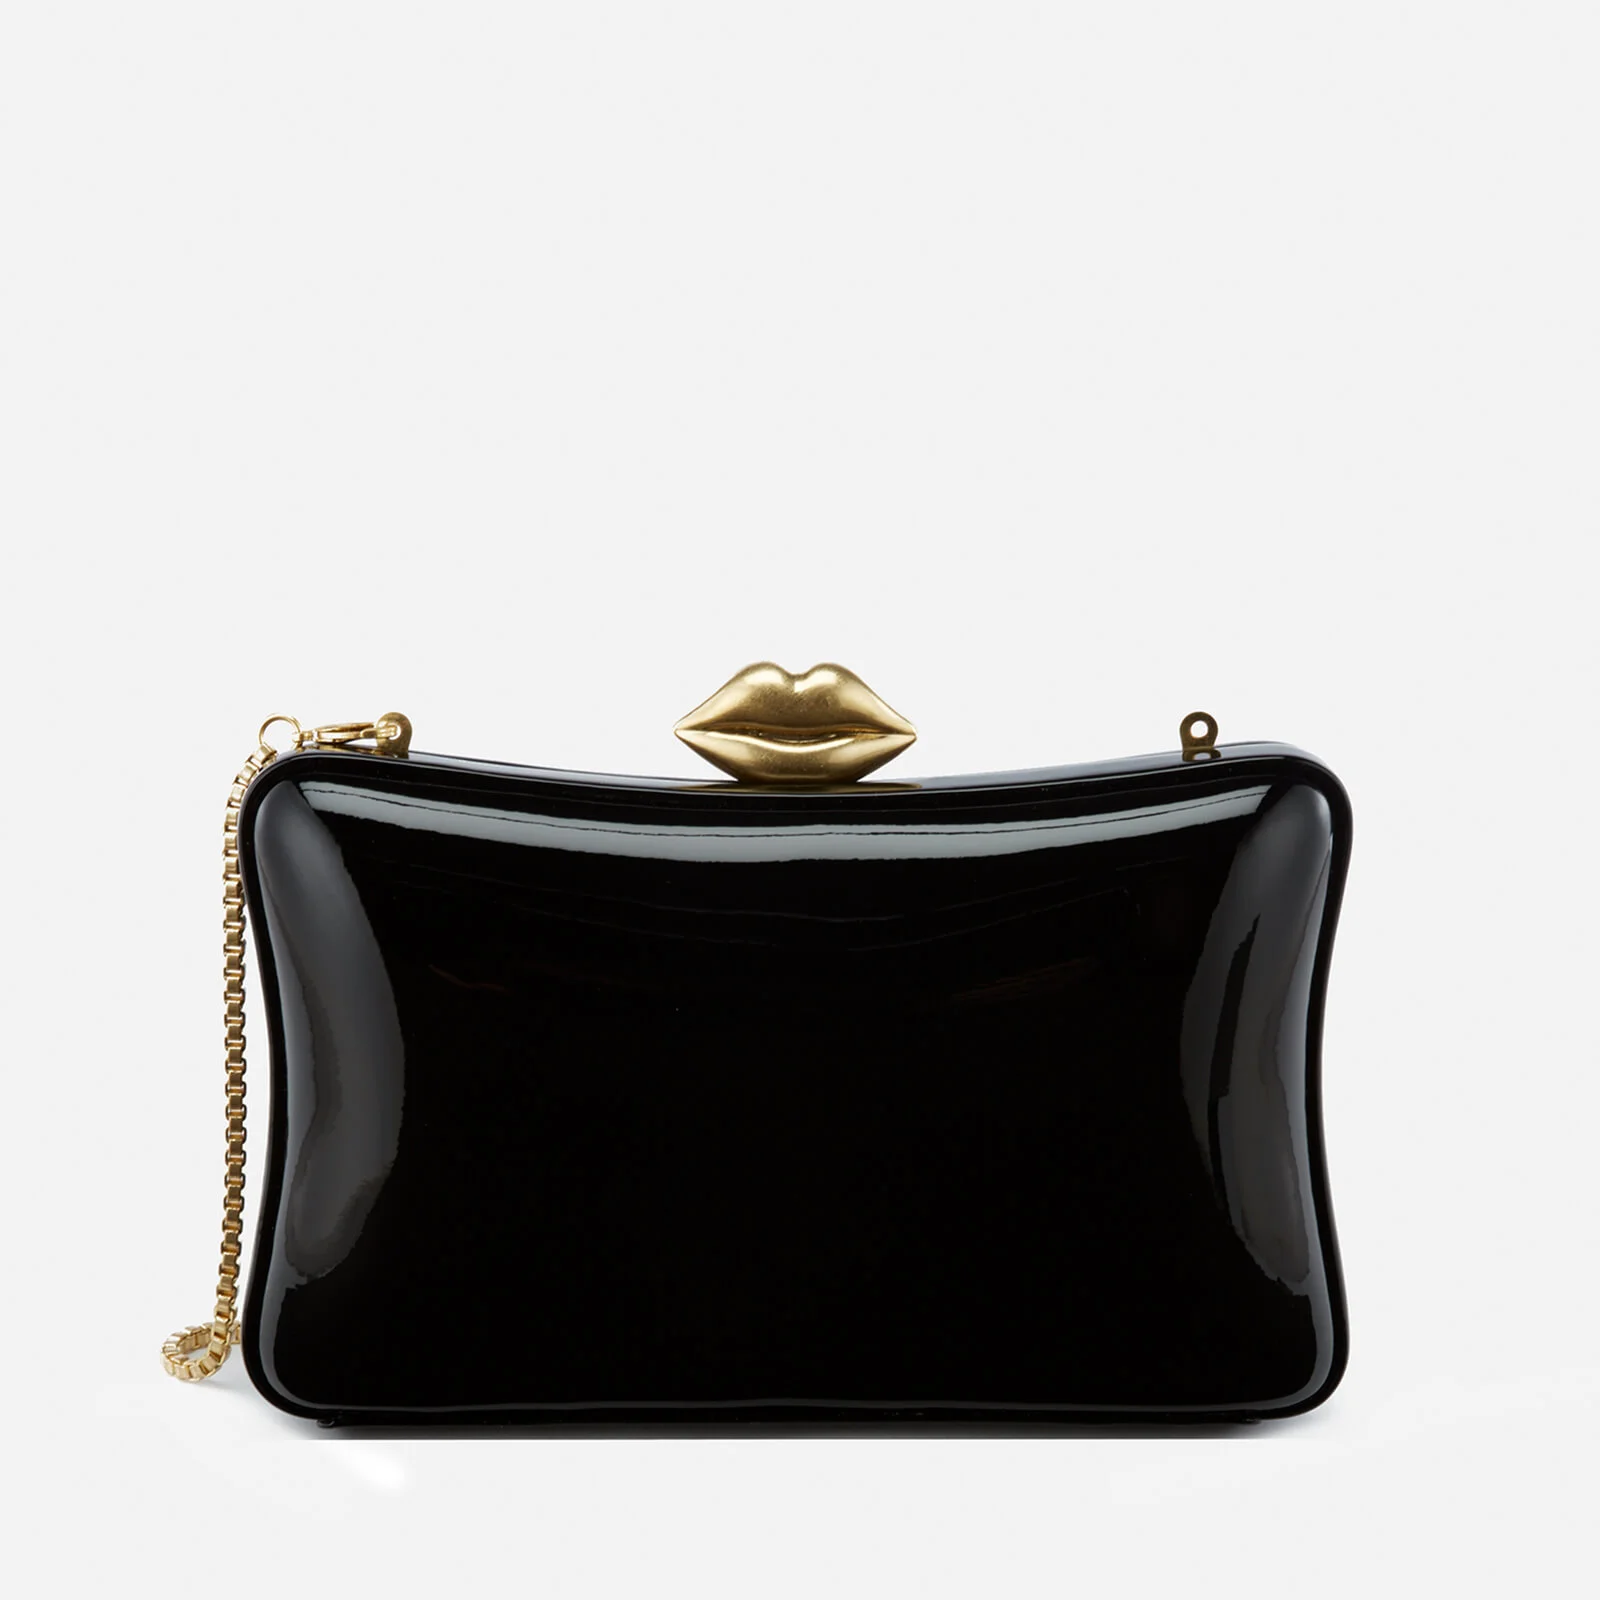 Lulu Guinness Women's Shiny Patent Leather Lavinia Bag - Black Image 1